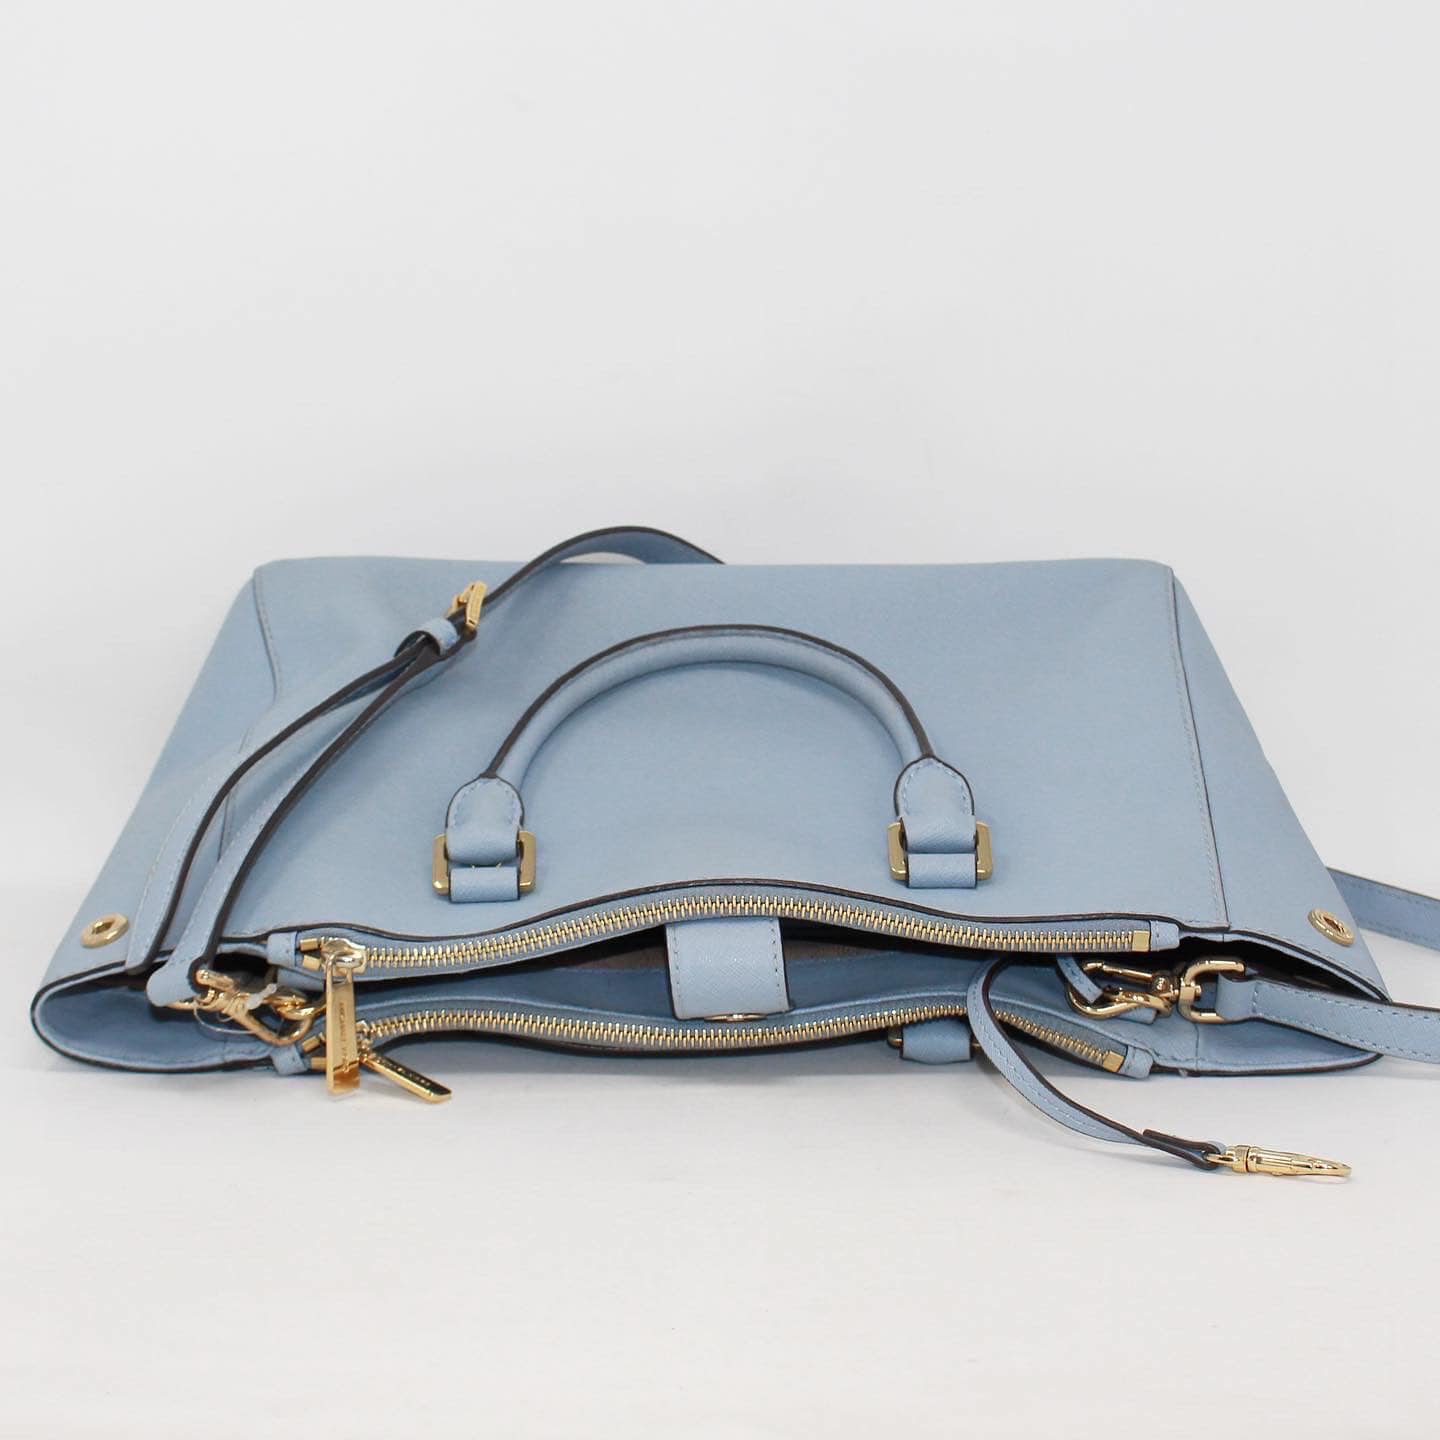 MICHAEL KORS #39965 Sky Blue Leather Crossbody Bag